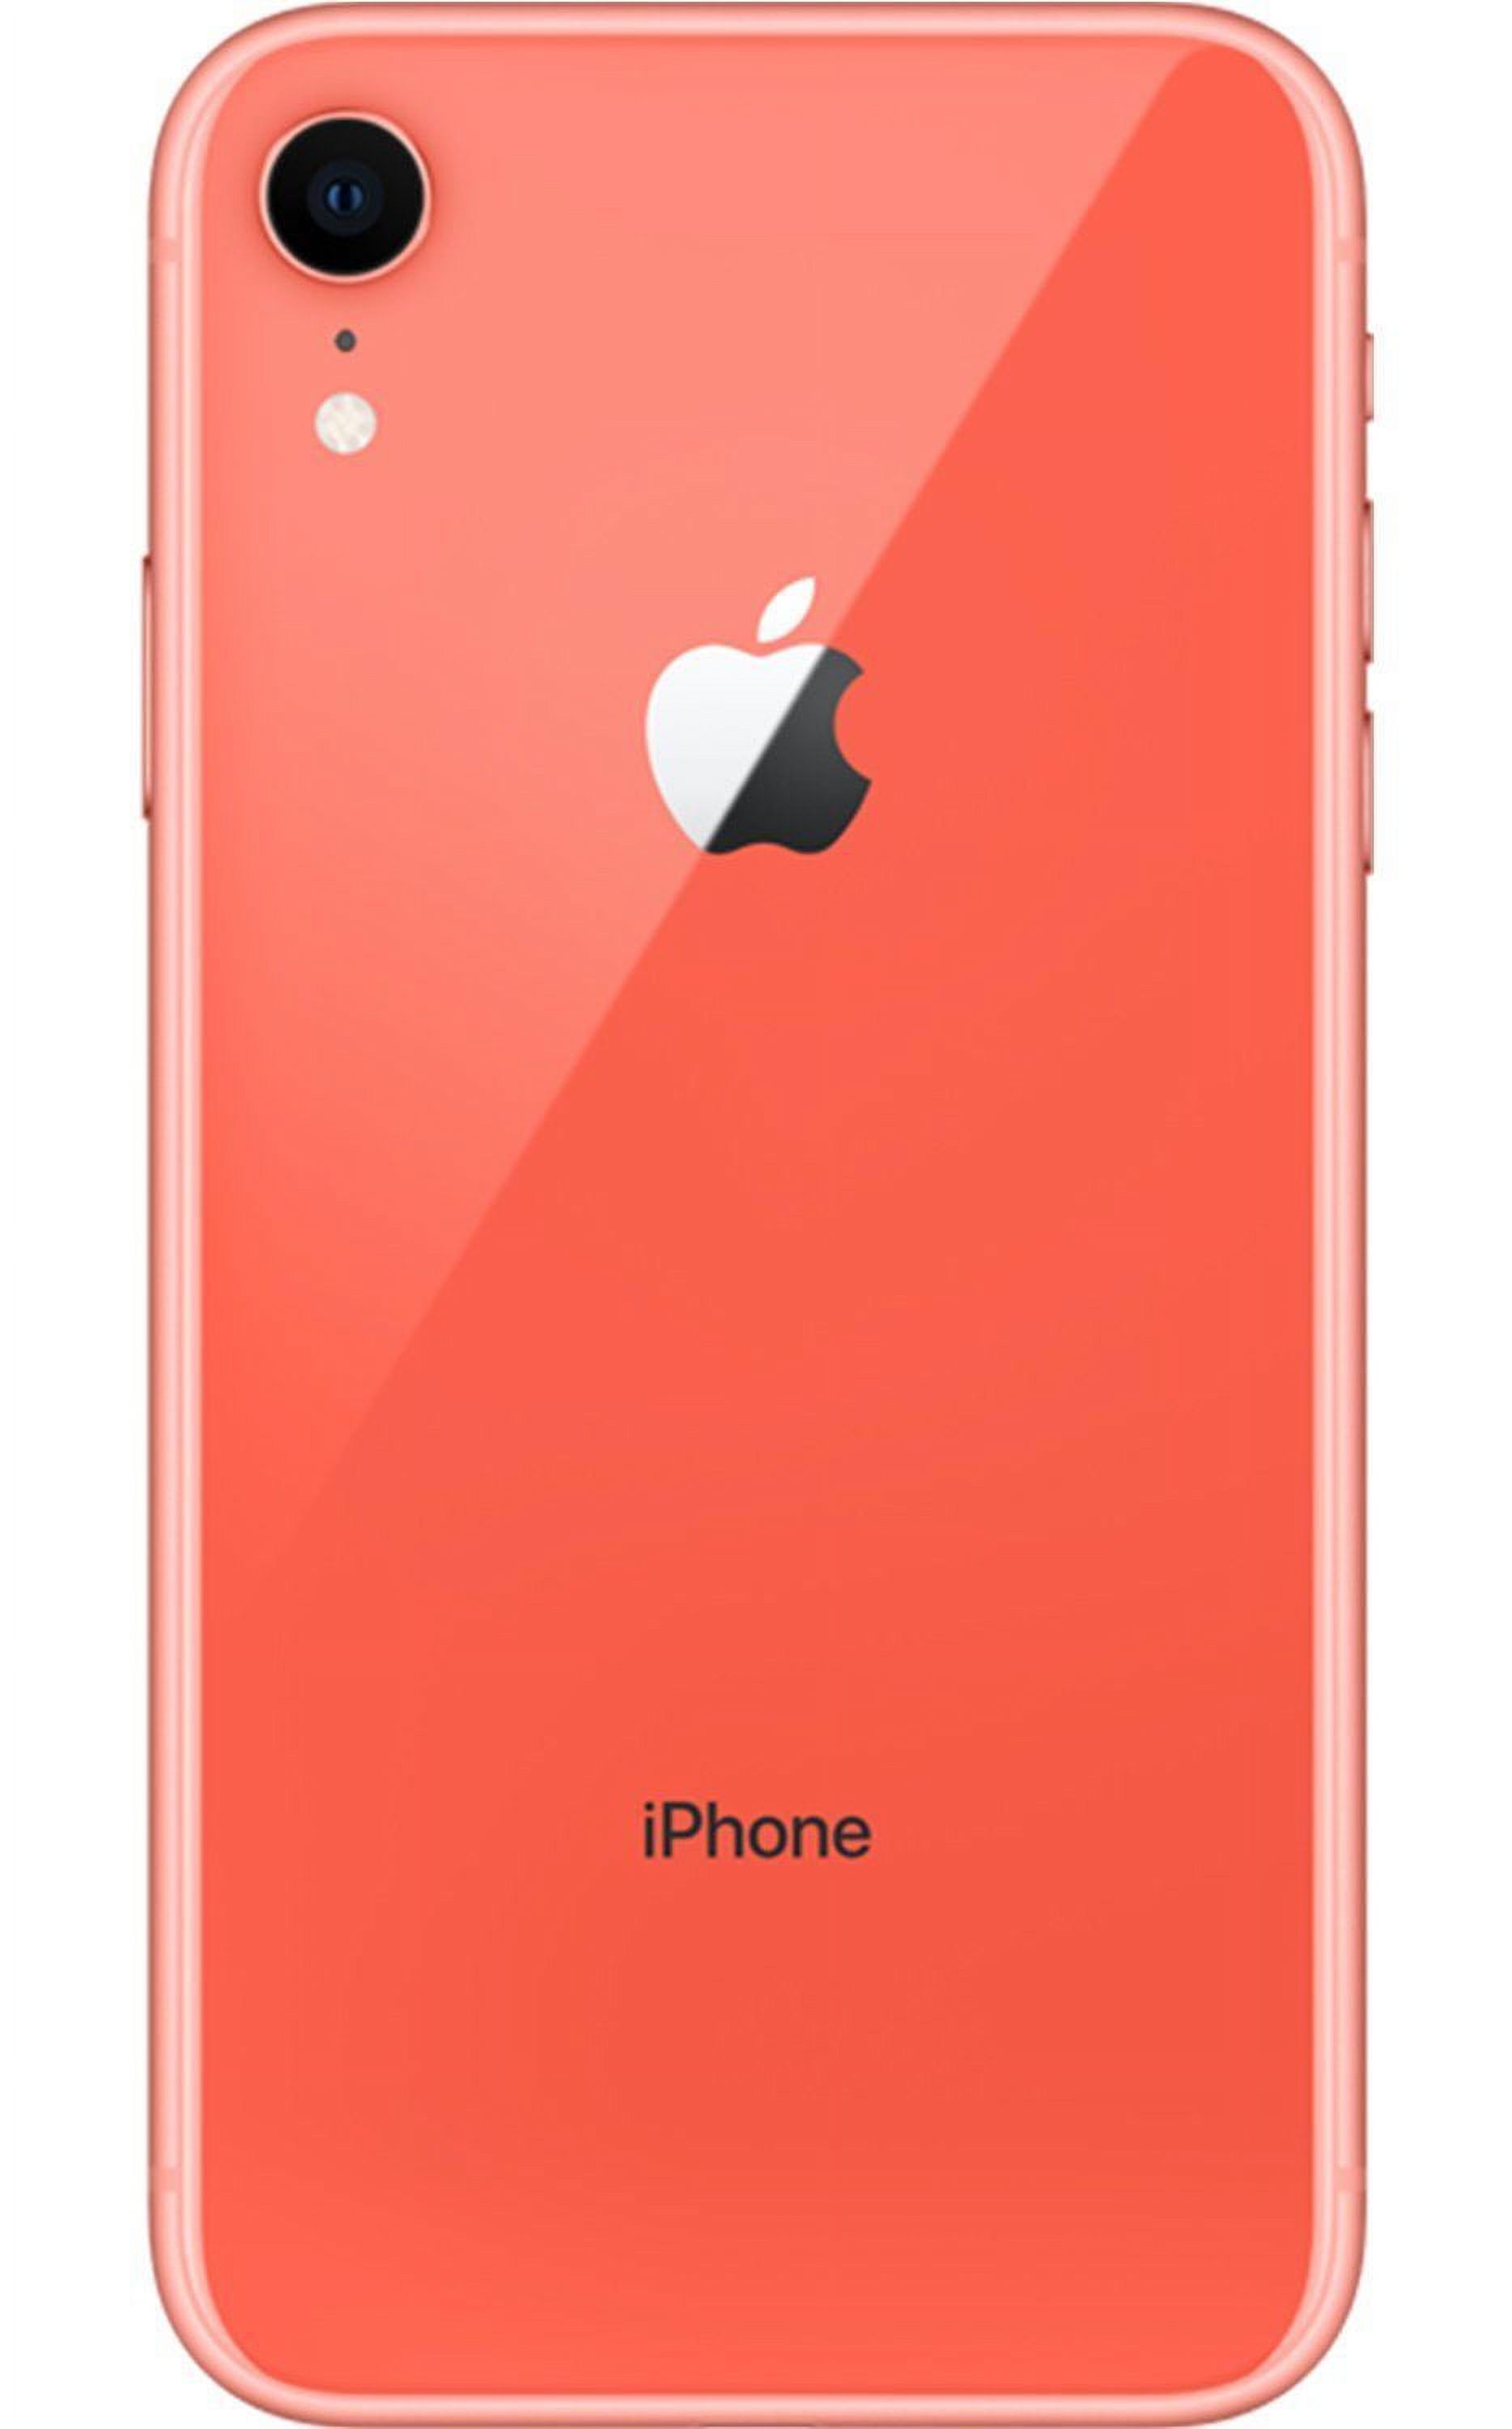 Restored Apple iPhone XR 64GB Factory Unlocked Smartphone 4G LTE iOS Smartphone (Refurbished) - image 1 of 2